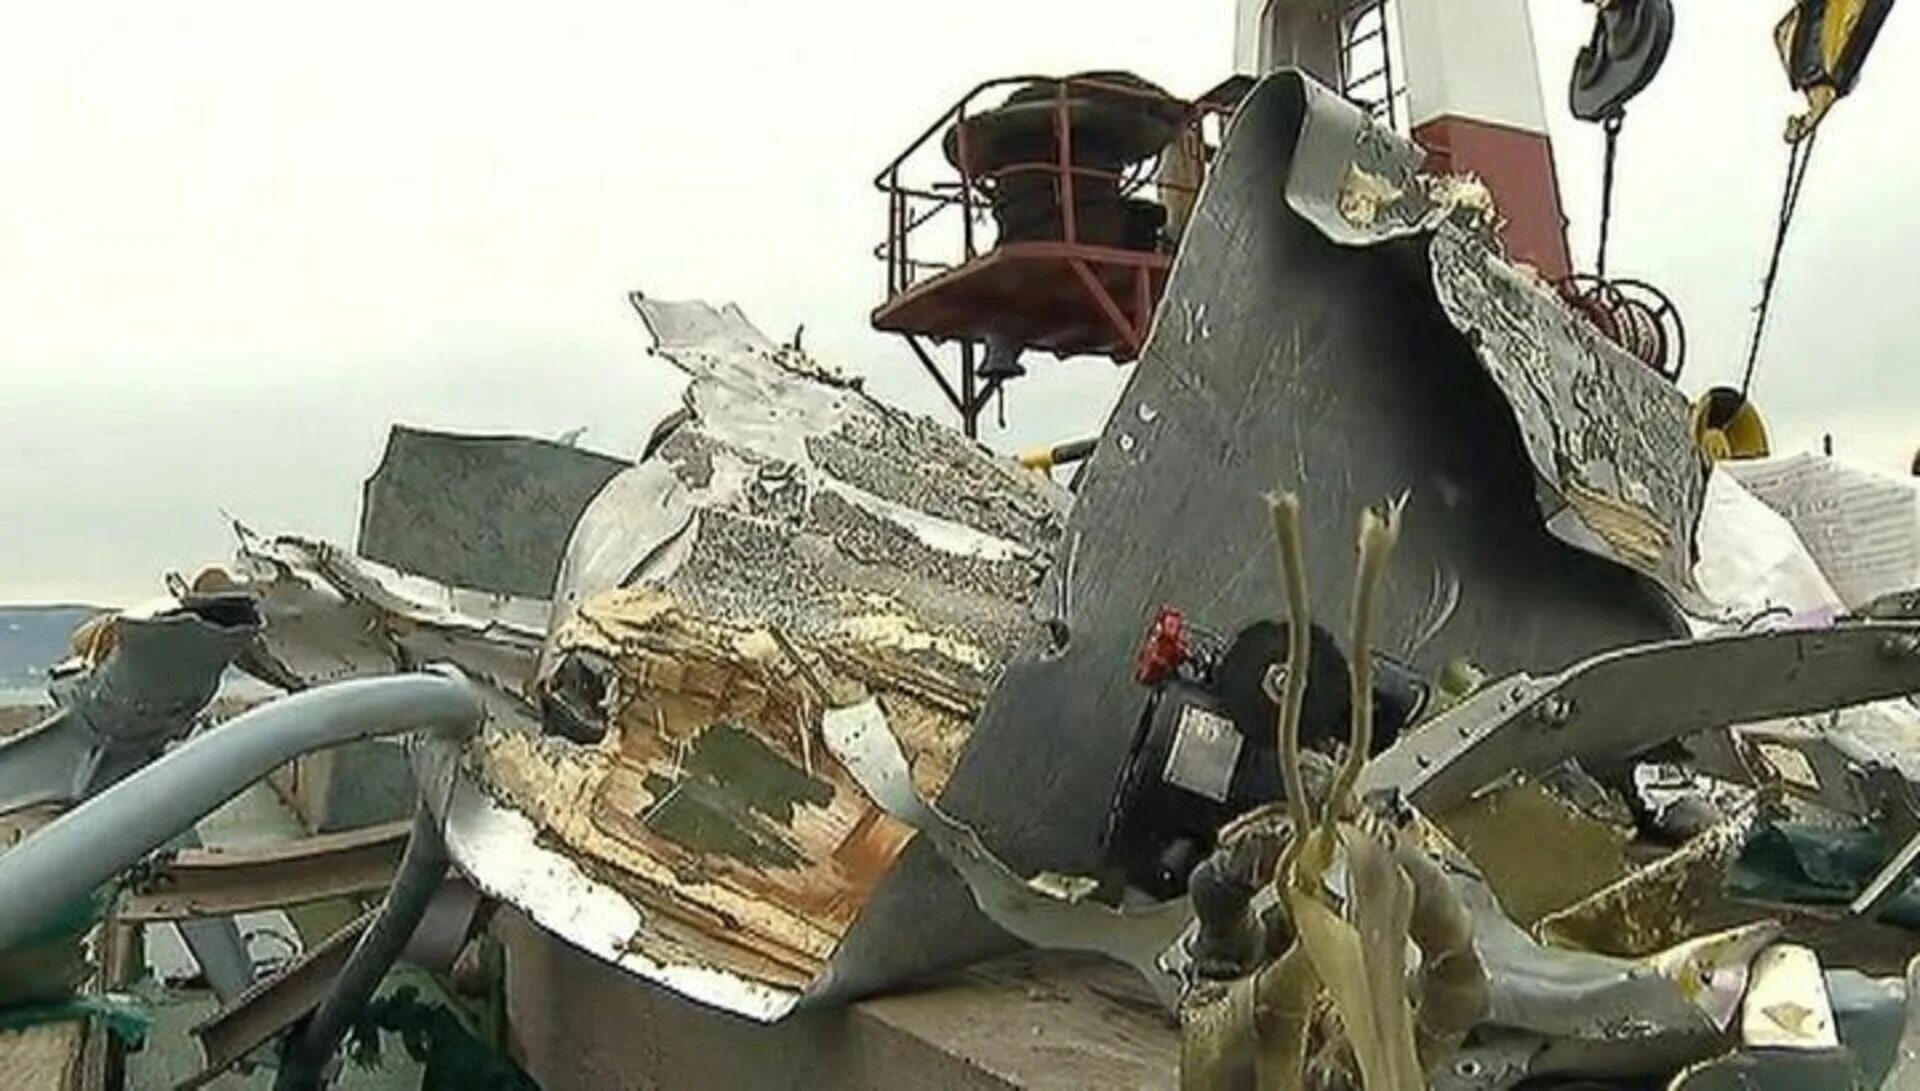 Ту-154 Сочи катастрофа. Авиакатастрофа в Сочи 2016 ту 154. Ту 154 авиакатастрофа Сочи. Катастро́фа ту-154 под Со́чи.